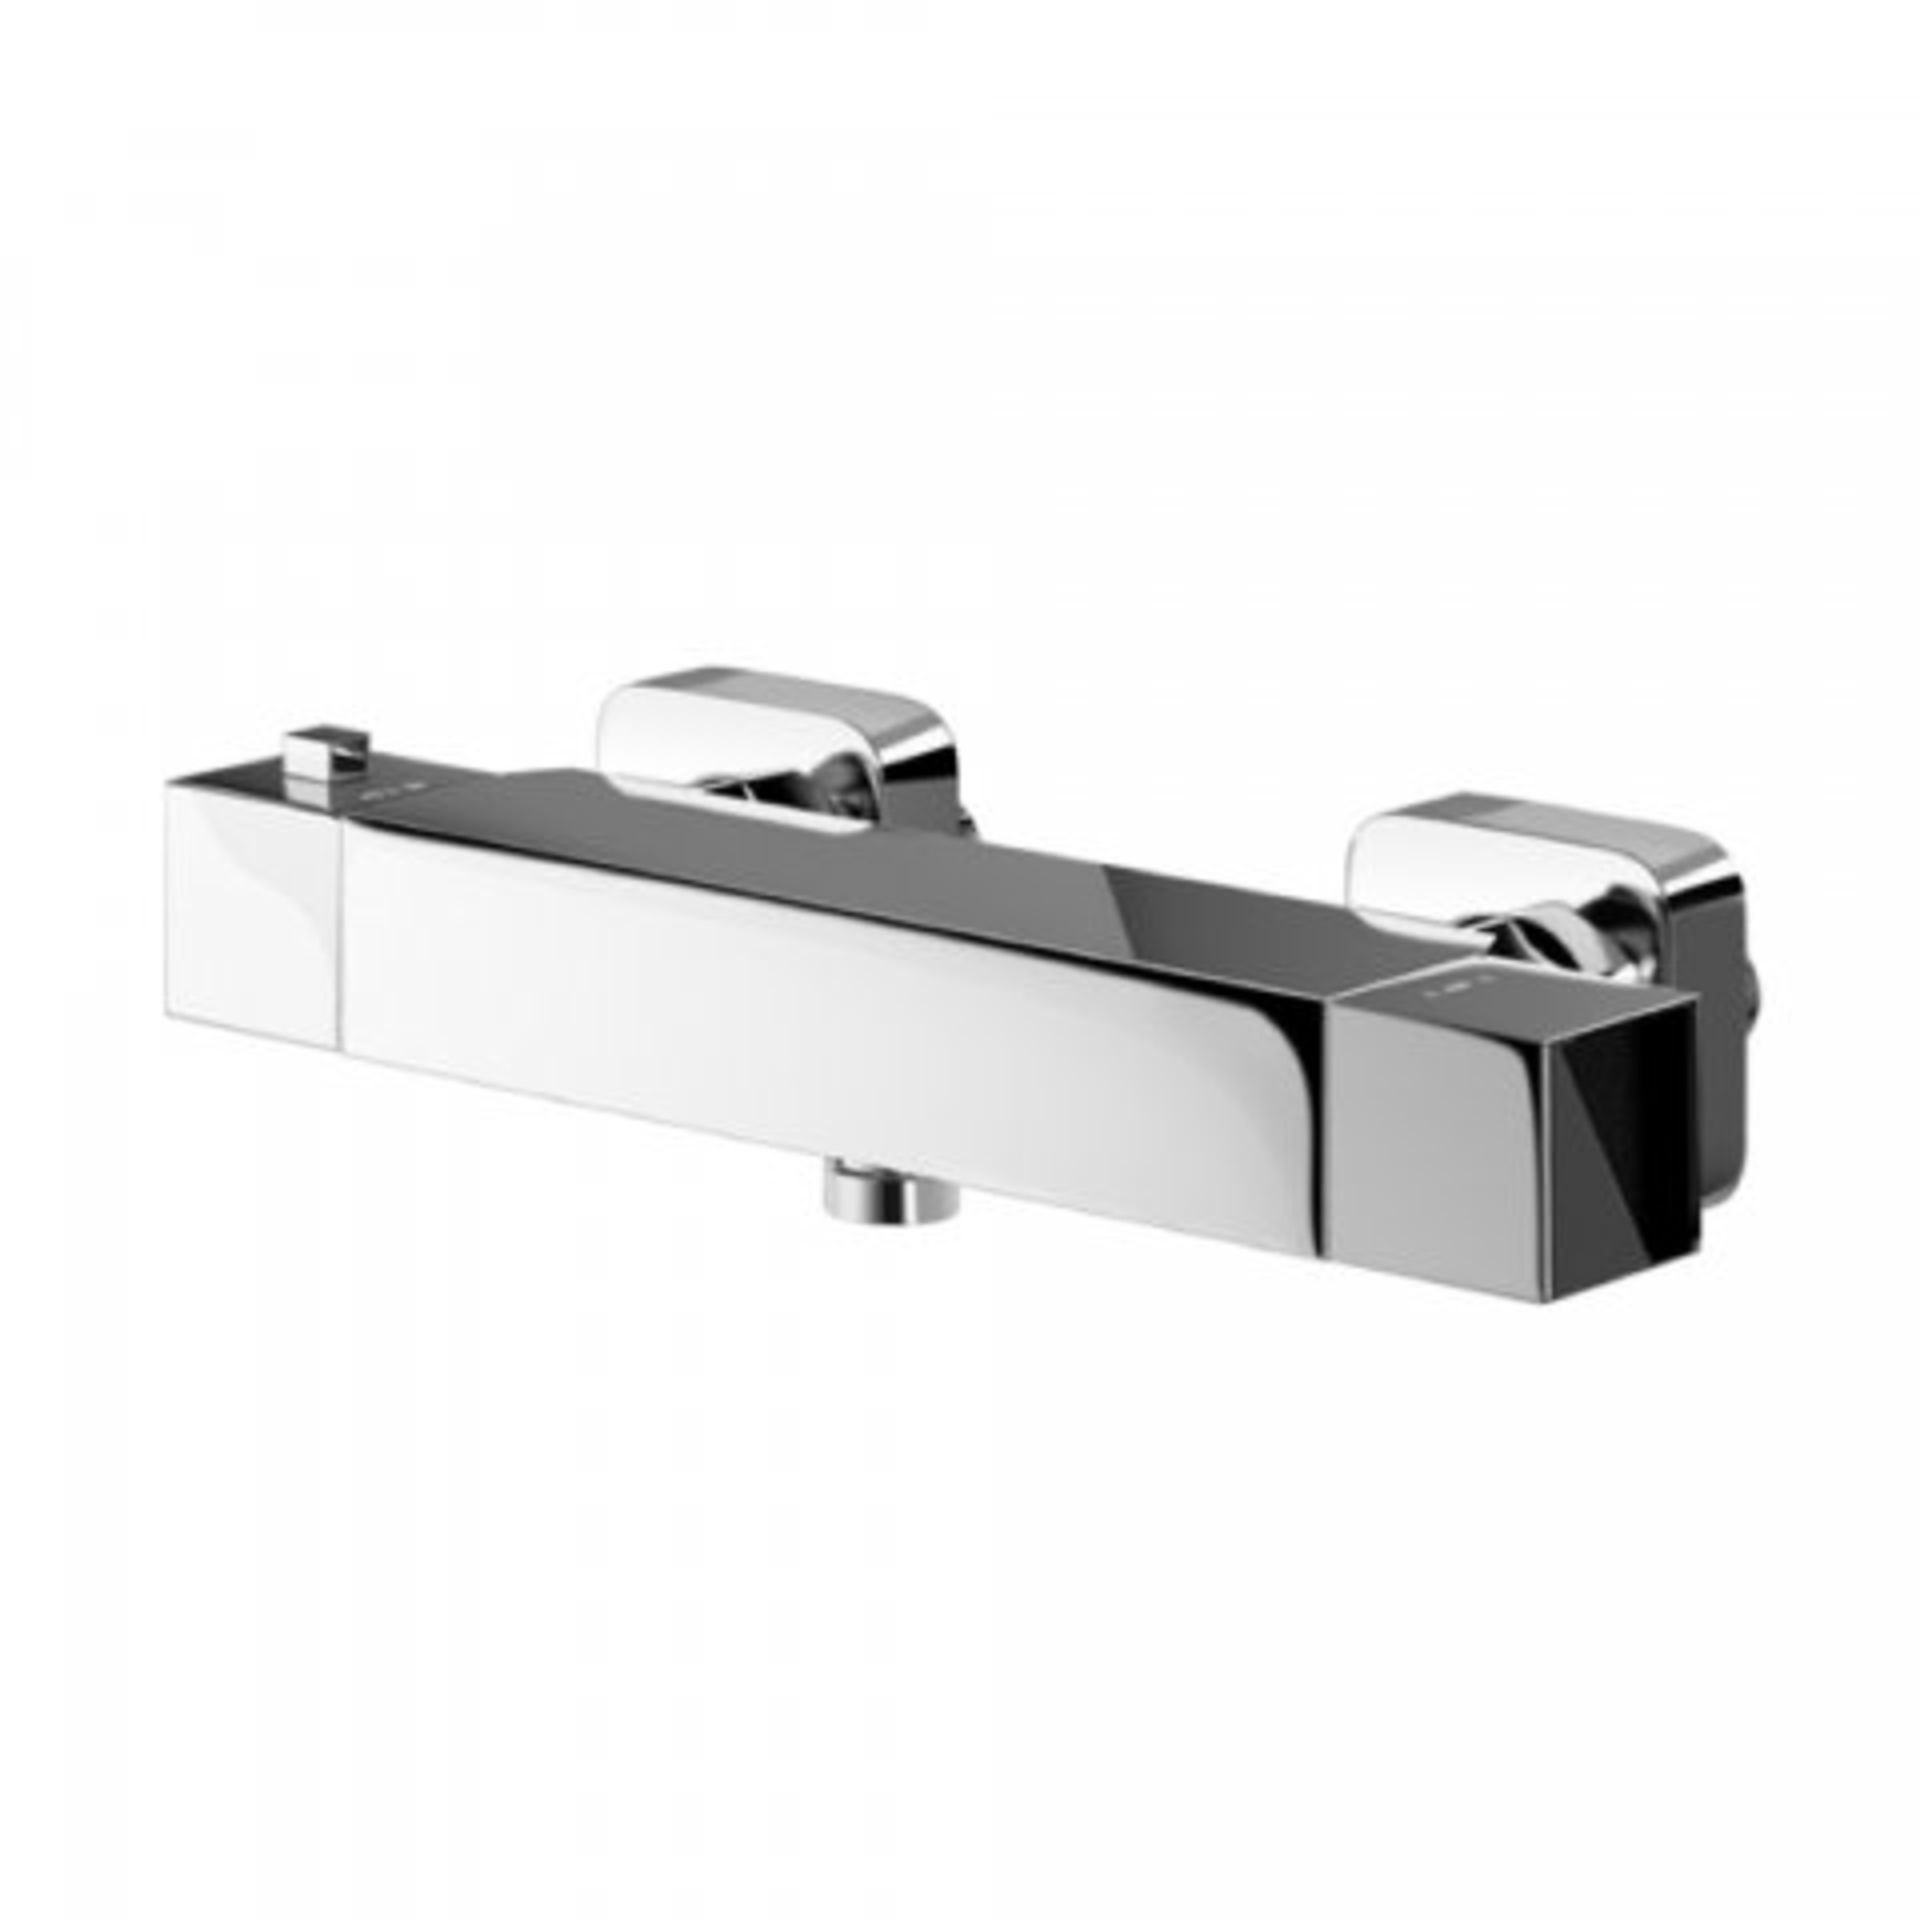 (I134) Thermostatic Shower Valve - Square Bar Mixer - Premium Range. RRP £119.99. Want the